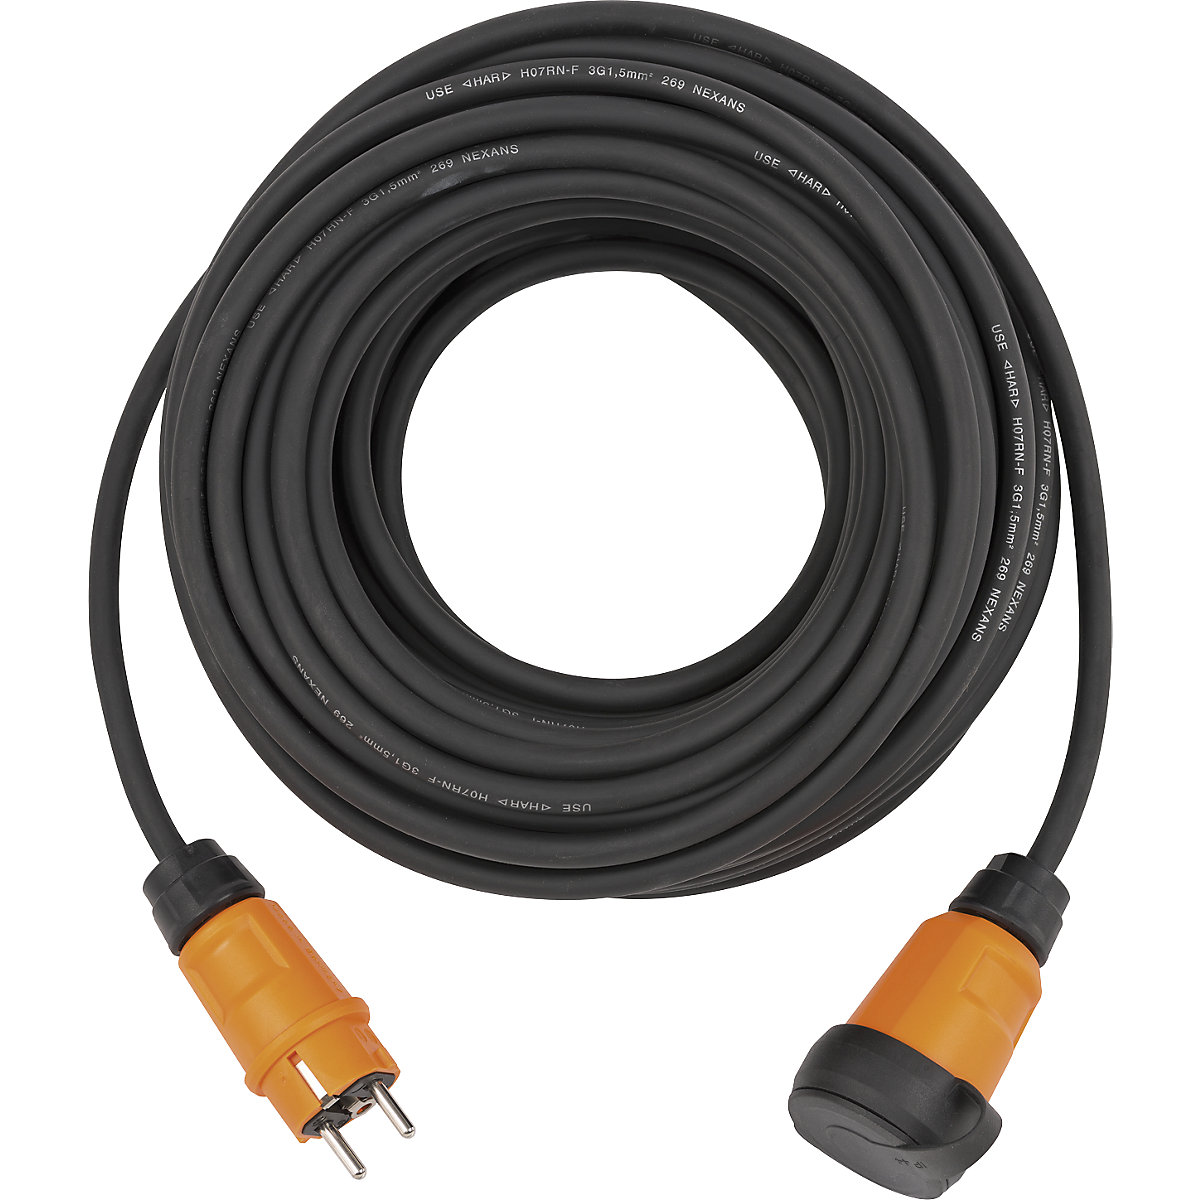 Cable alargador para exteriores professionalLINE IP44 - Brennenstuhl